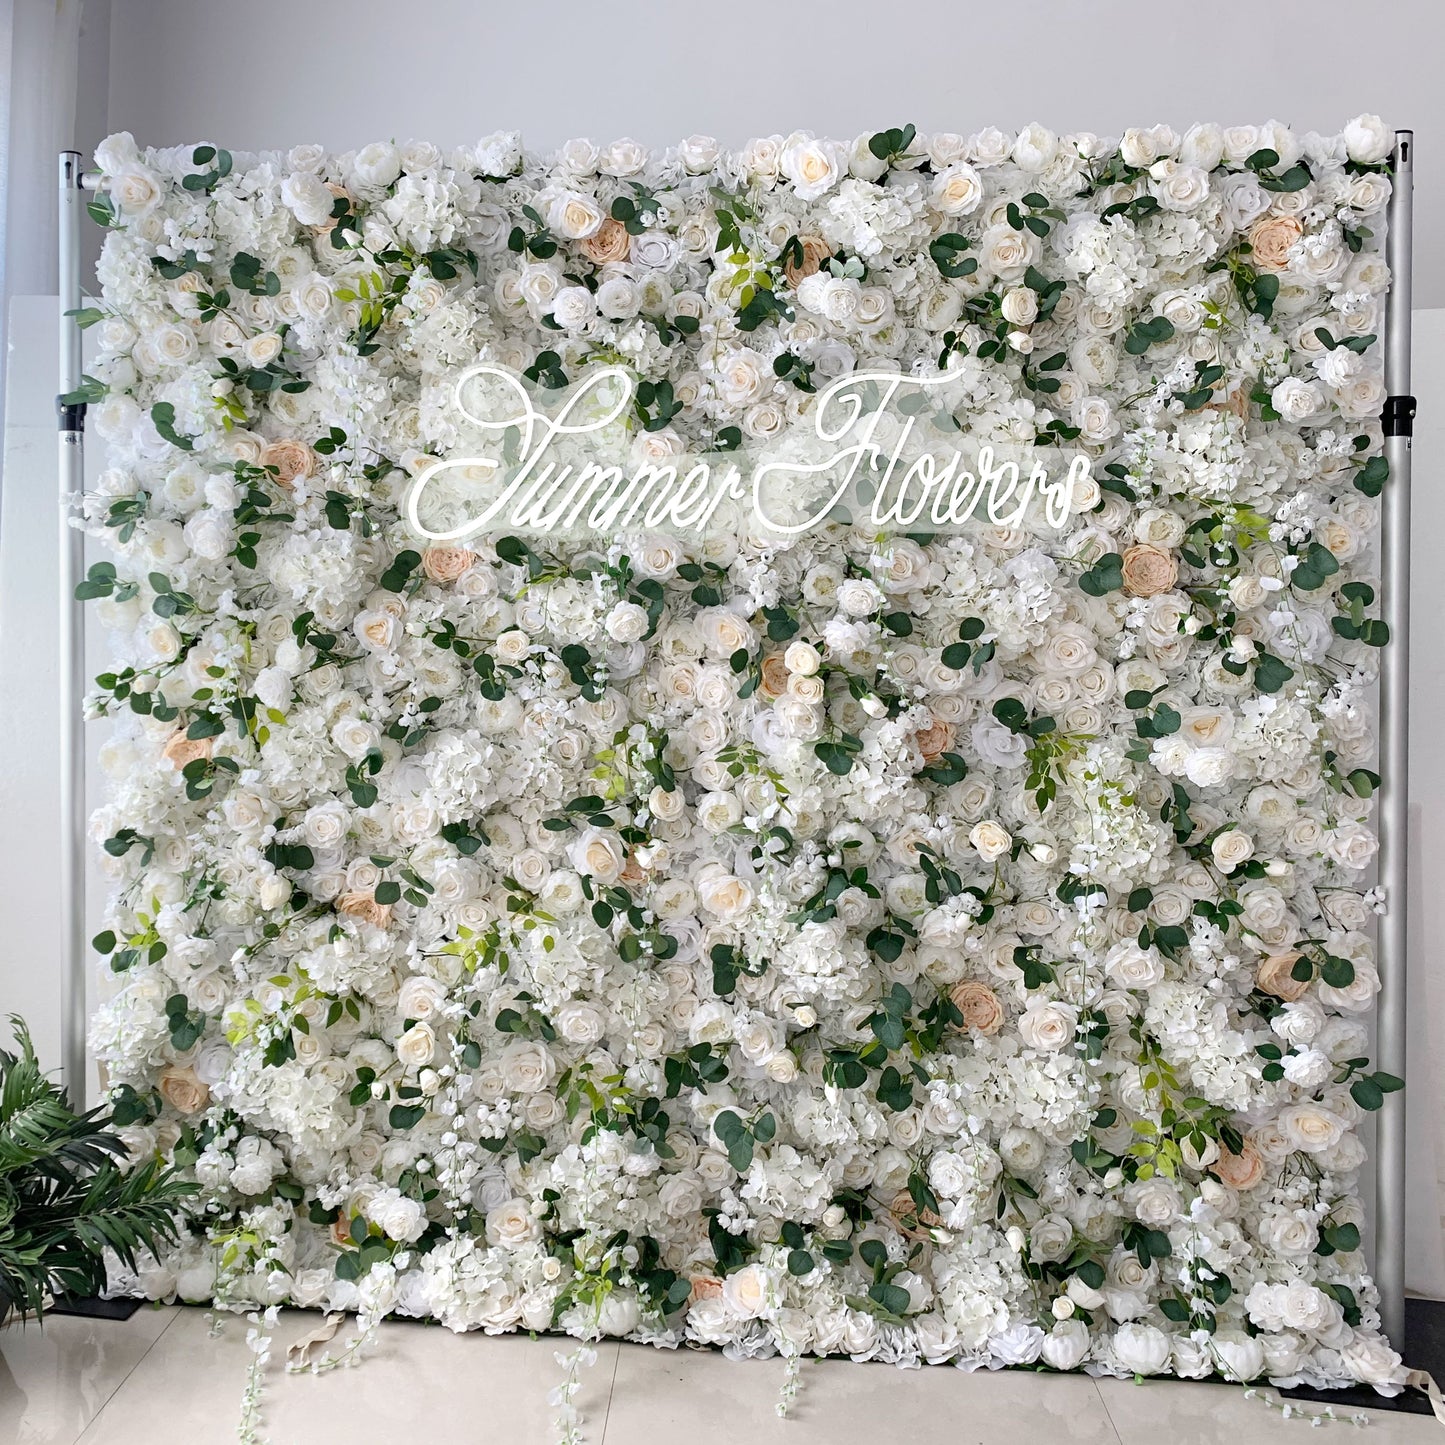 Summer Flower:CB-150 8ft*8ft Cloth Back Artificial Flower Wall Backdrop